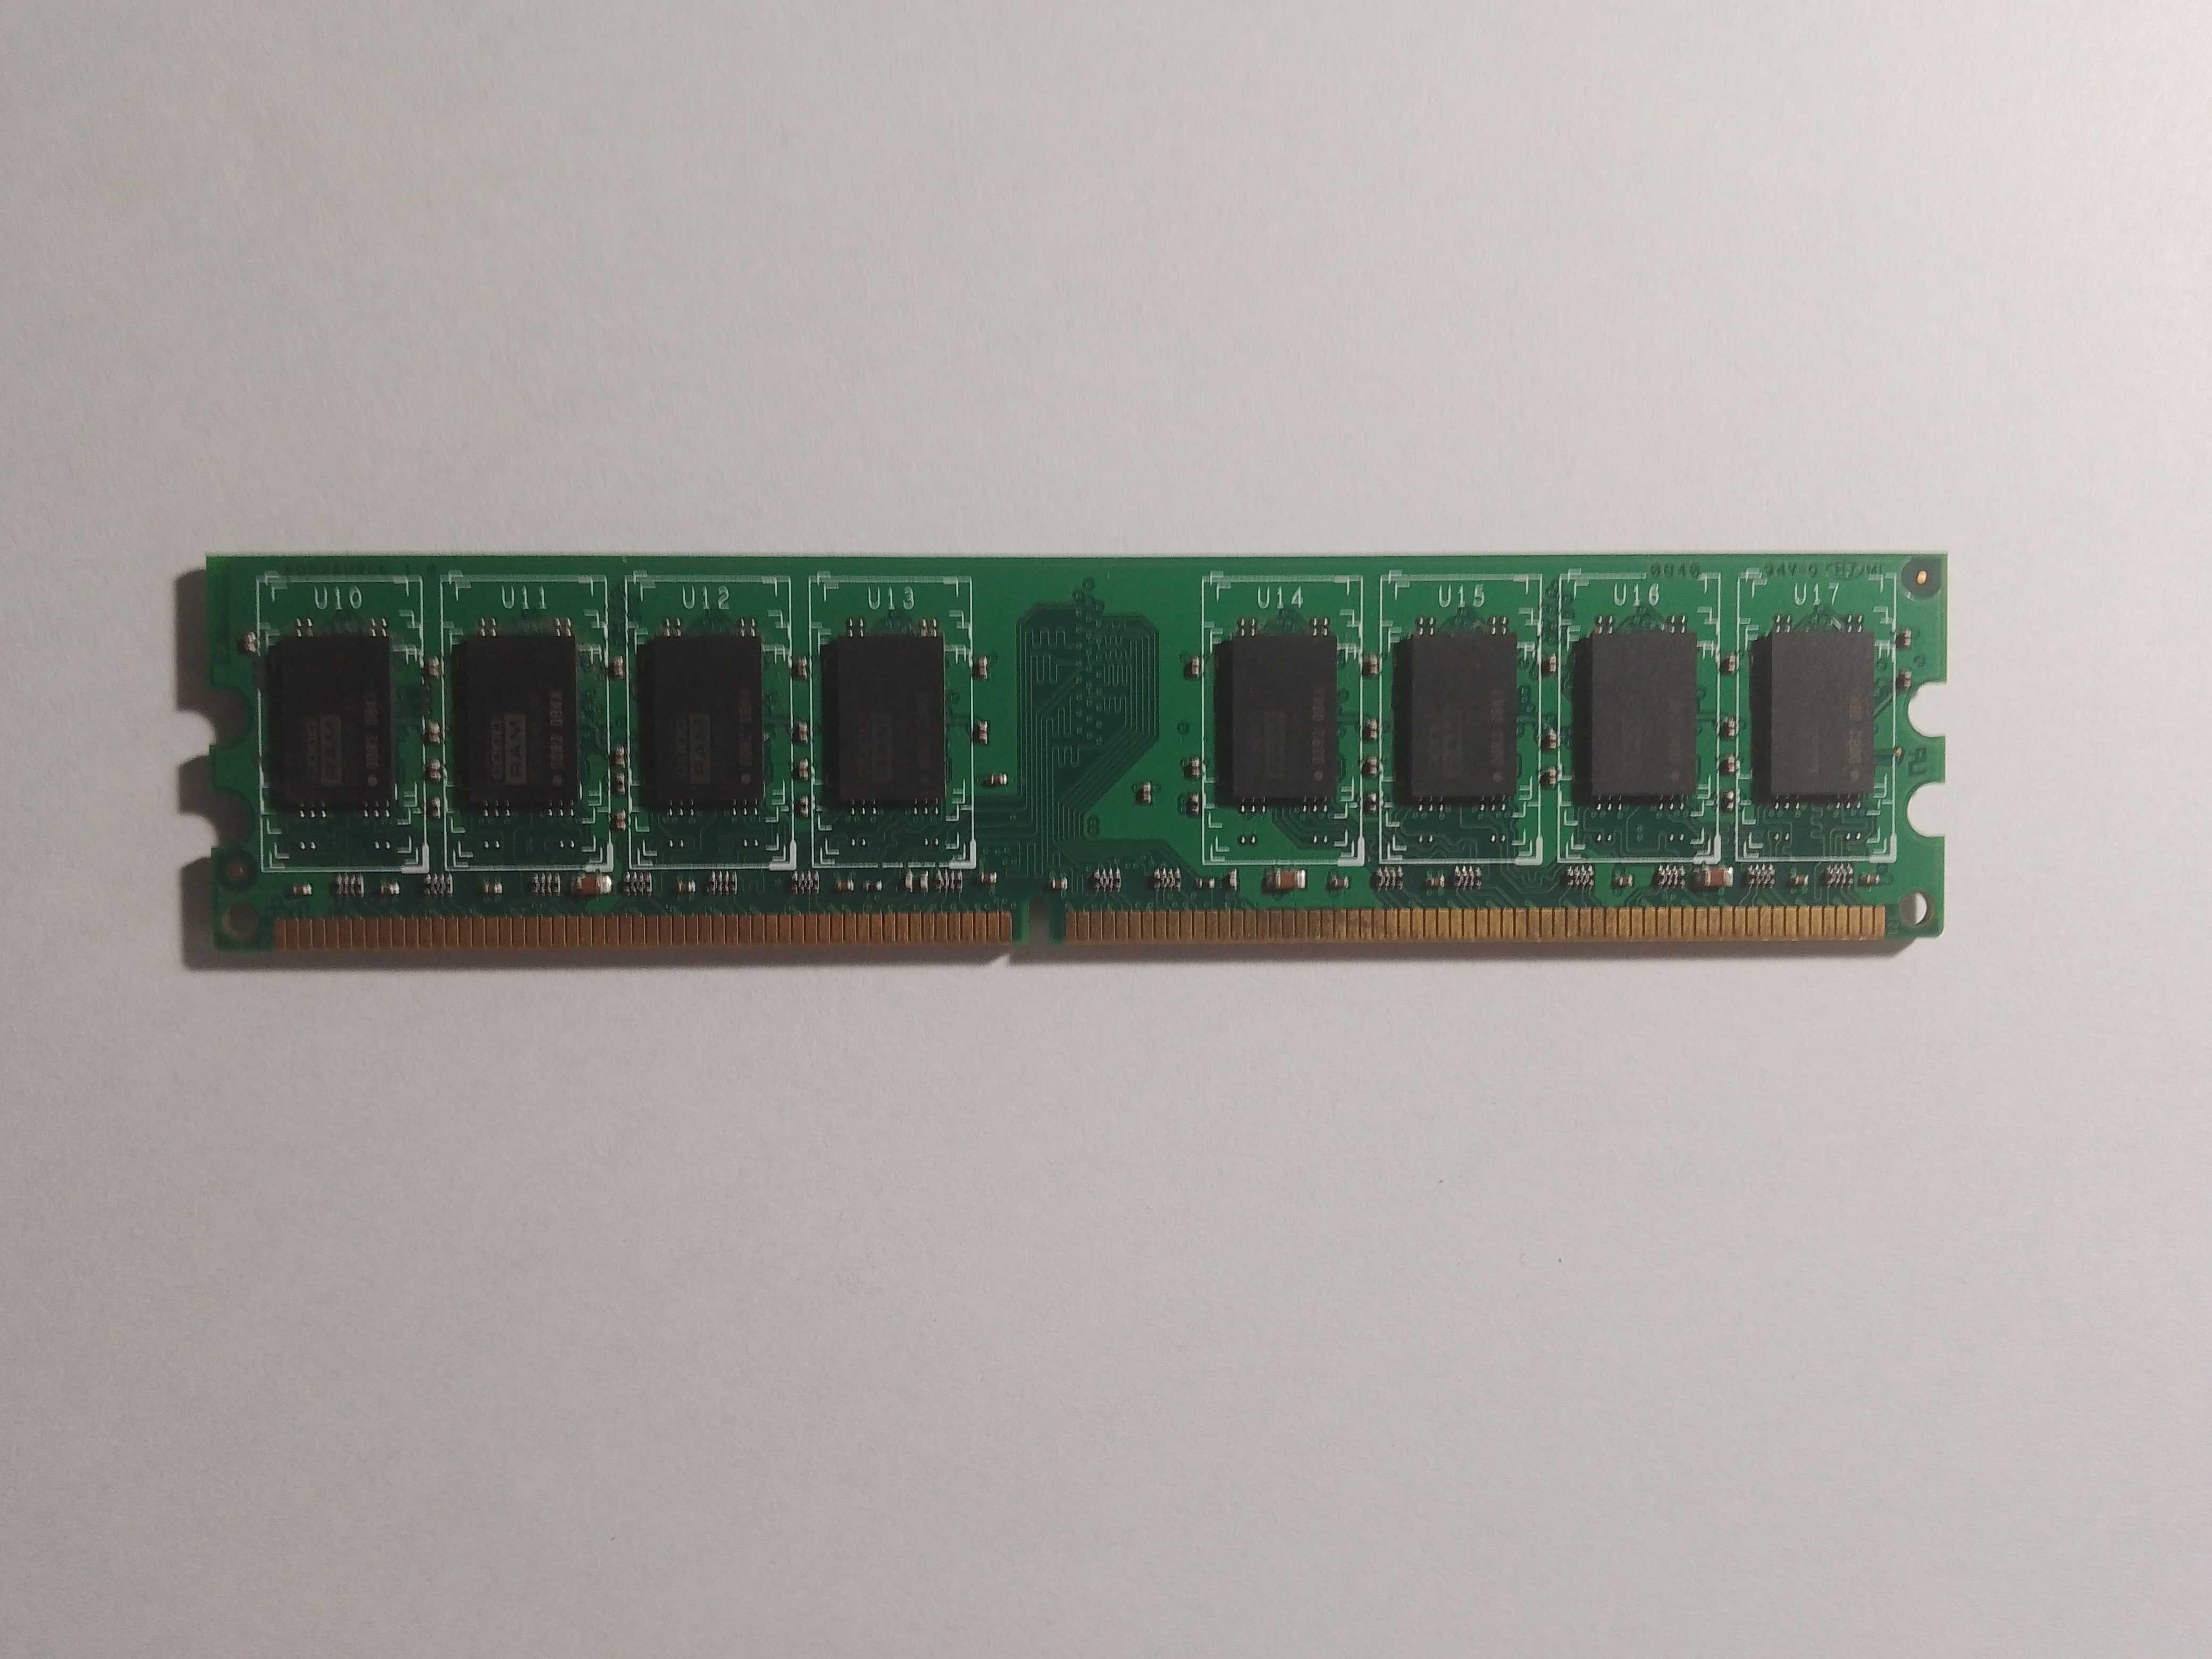 Pamięć DDR2, 1GB PC2-6400 DIMM